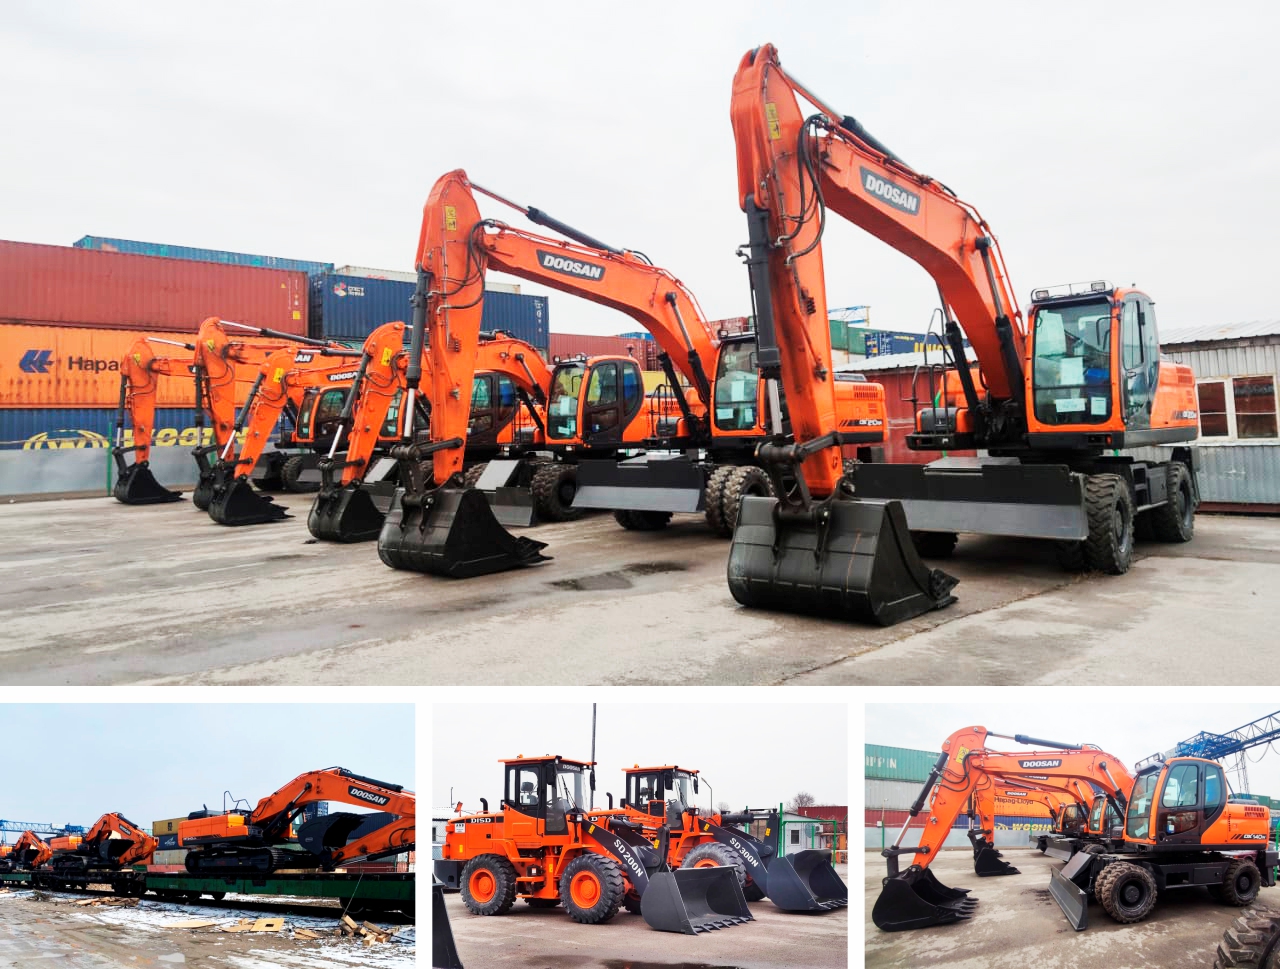 The all-new Doosan wheel loaders, crawler and wheel excavators are in Kazakhstan